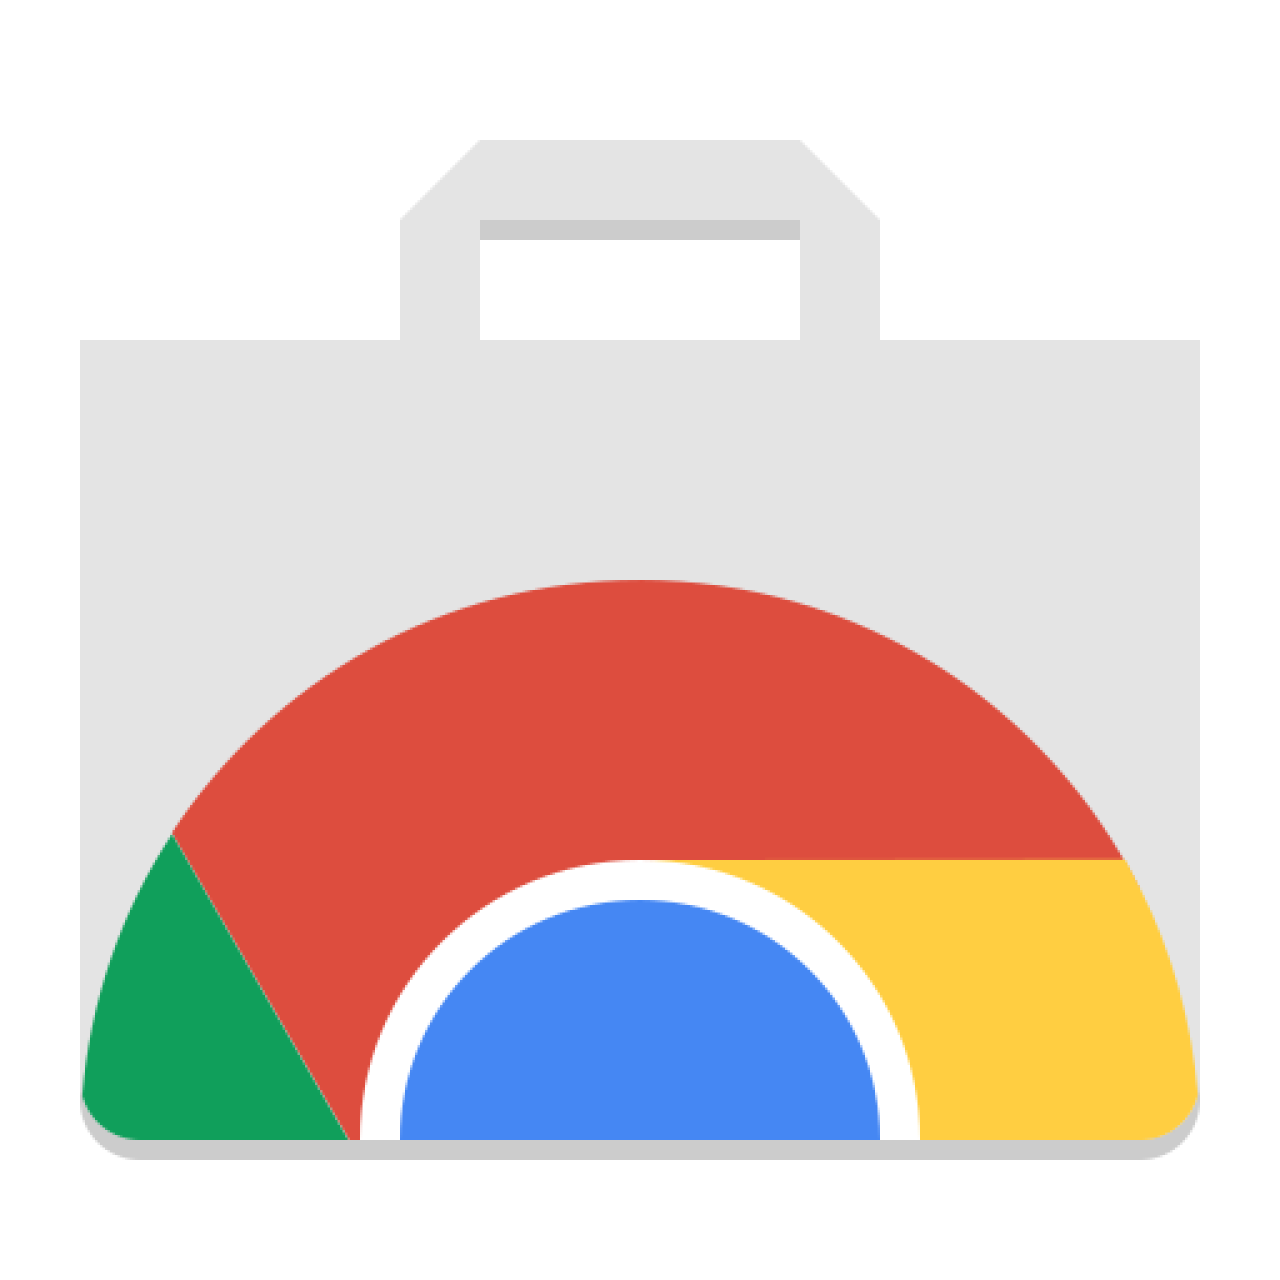 Google webstore extension. Иконки для расширений Chrome. Интернет магазин Chrome логотип. Google Market иконка. Google Chrome web Store.